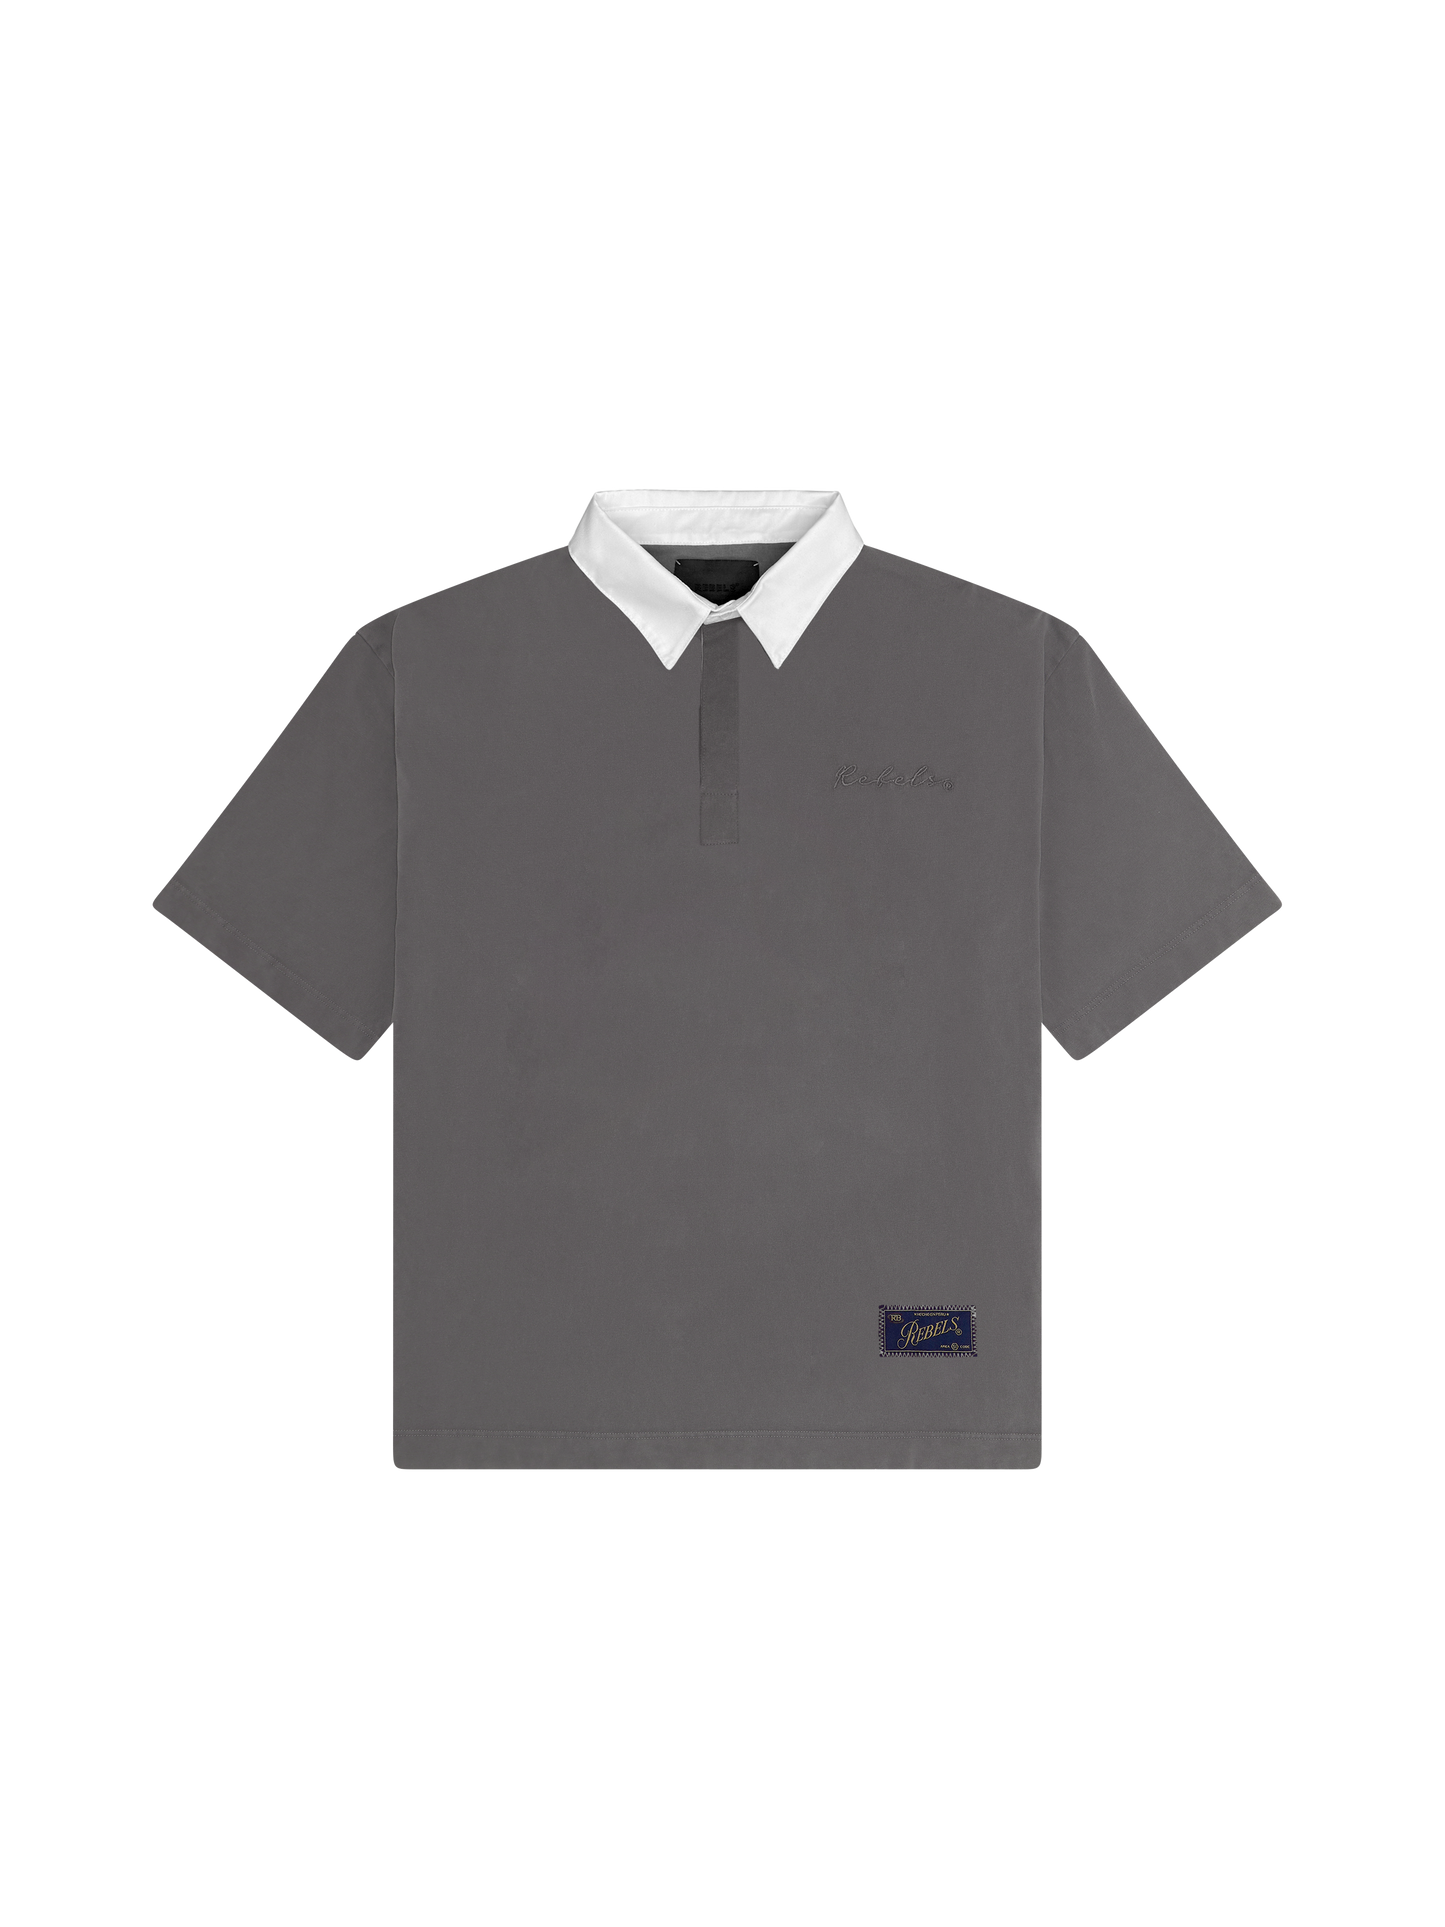 Heavy polo shirt - washed grey